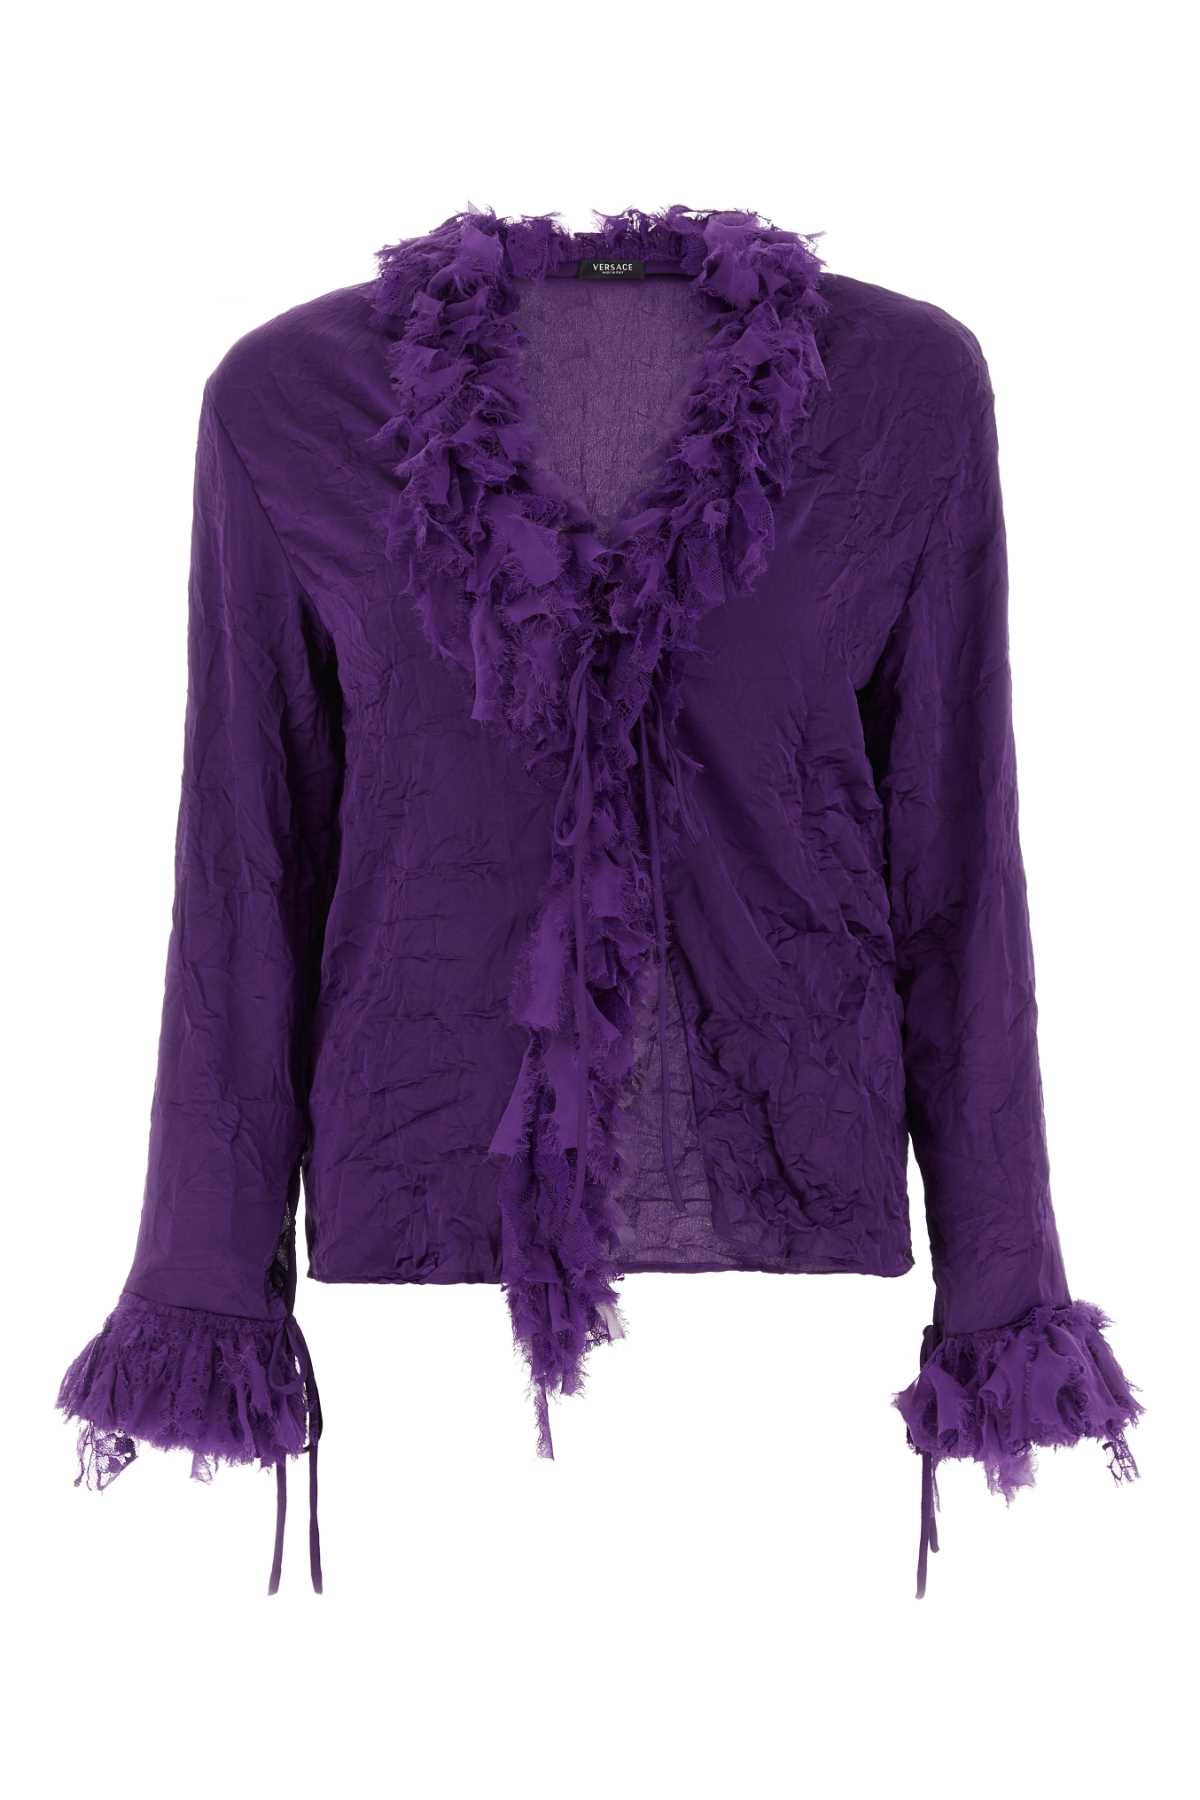 Versace Purple Polyester Blouse In Brightdarkorchid